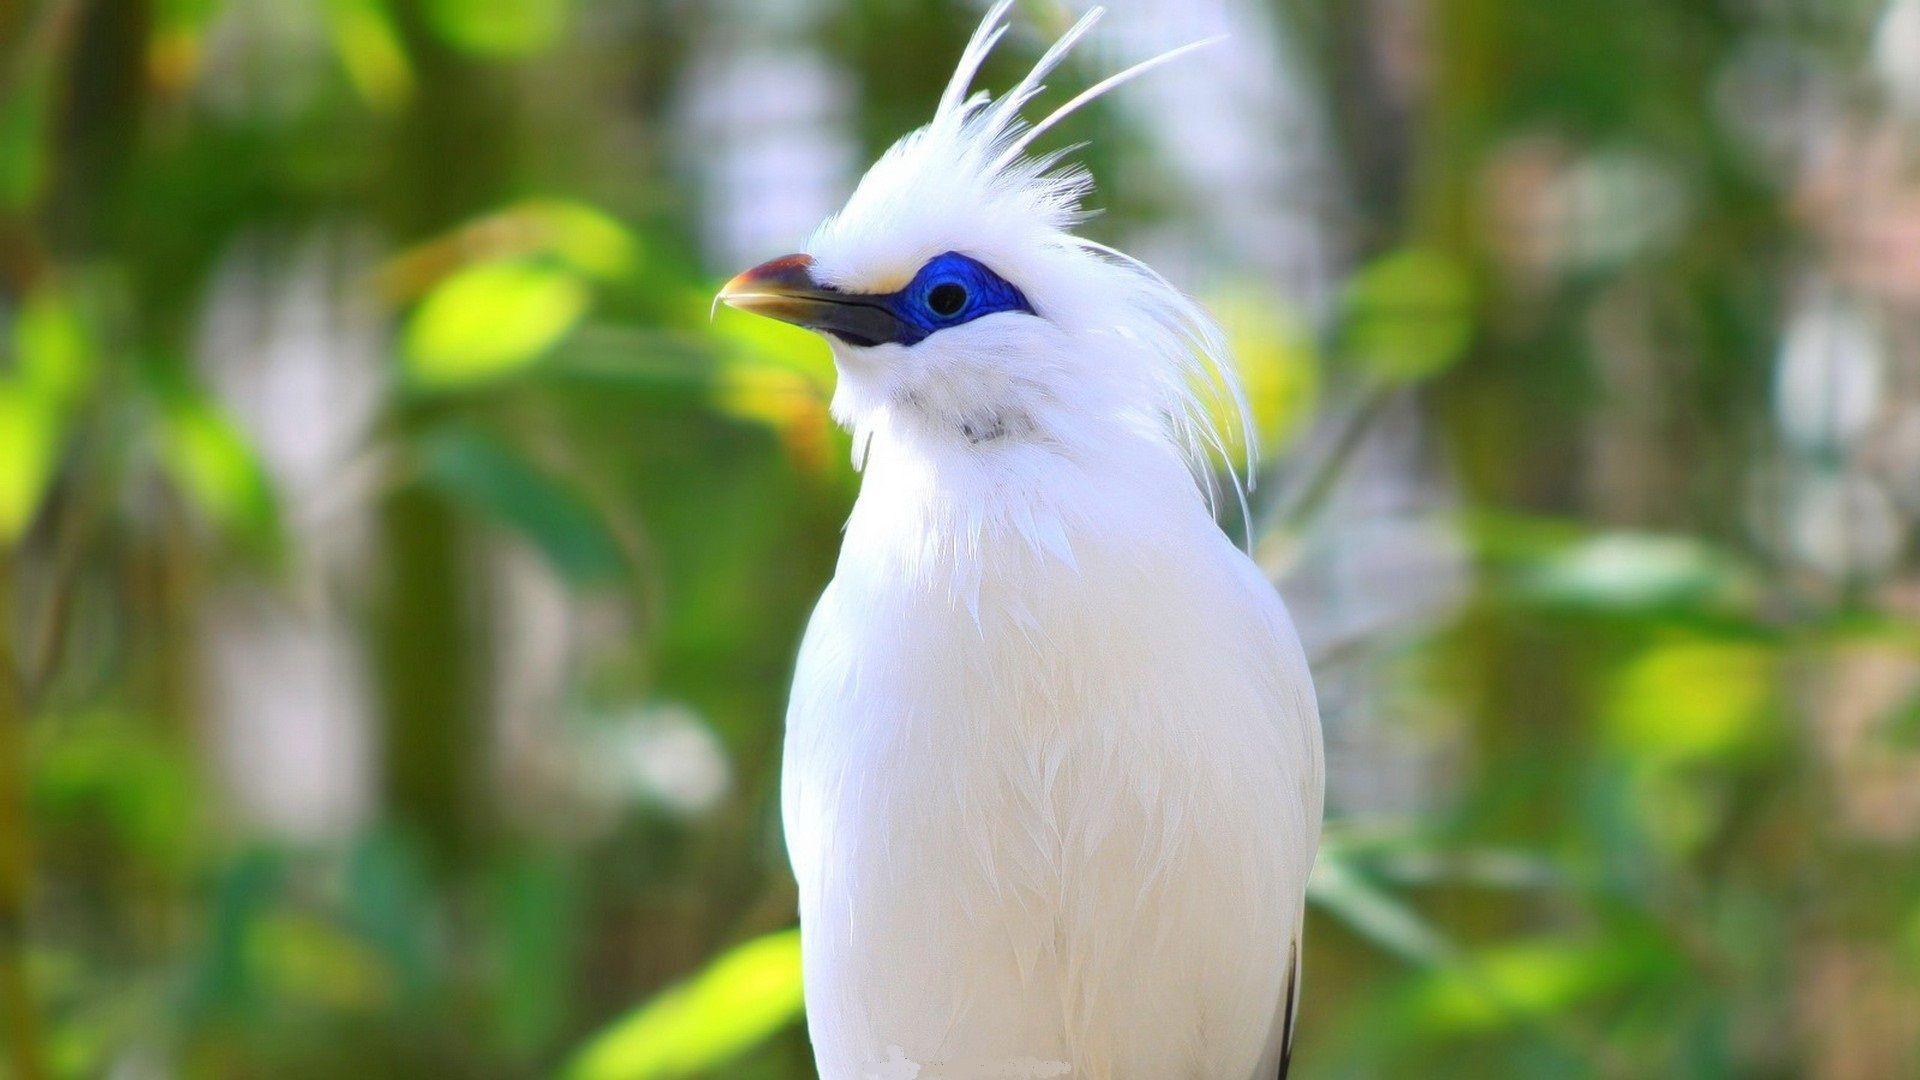 Beautiful Birds Around The World. Science & Technology